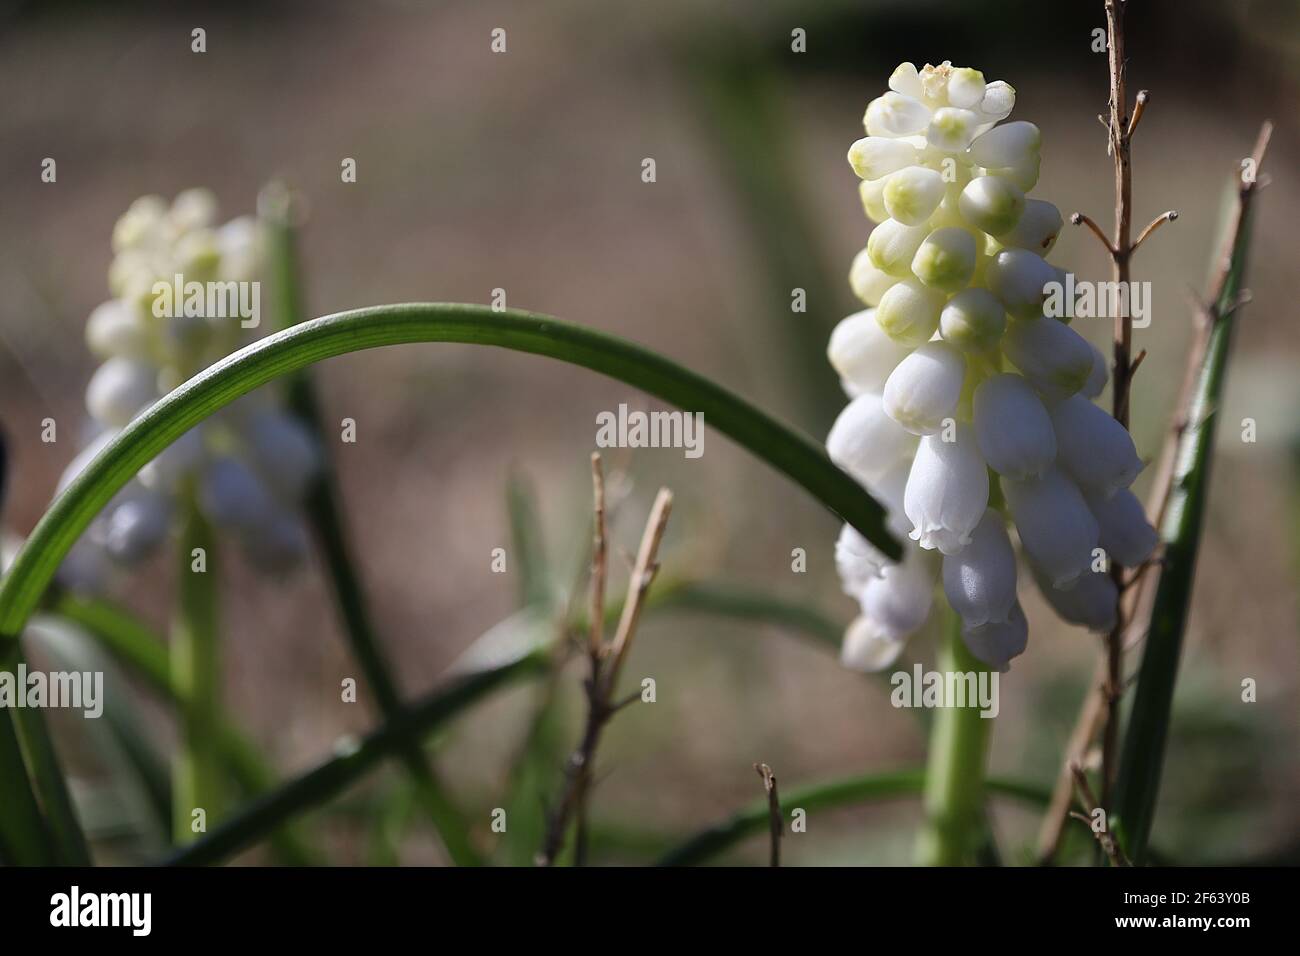 Muscari armeniacum ‘Album’ white grape hyacinth – cluster of tiny urn-shaped white flowers on conical flowerhead,  March, England, UK Stock Photo